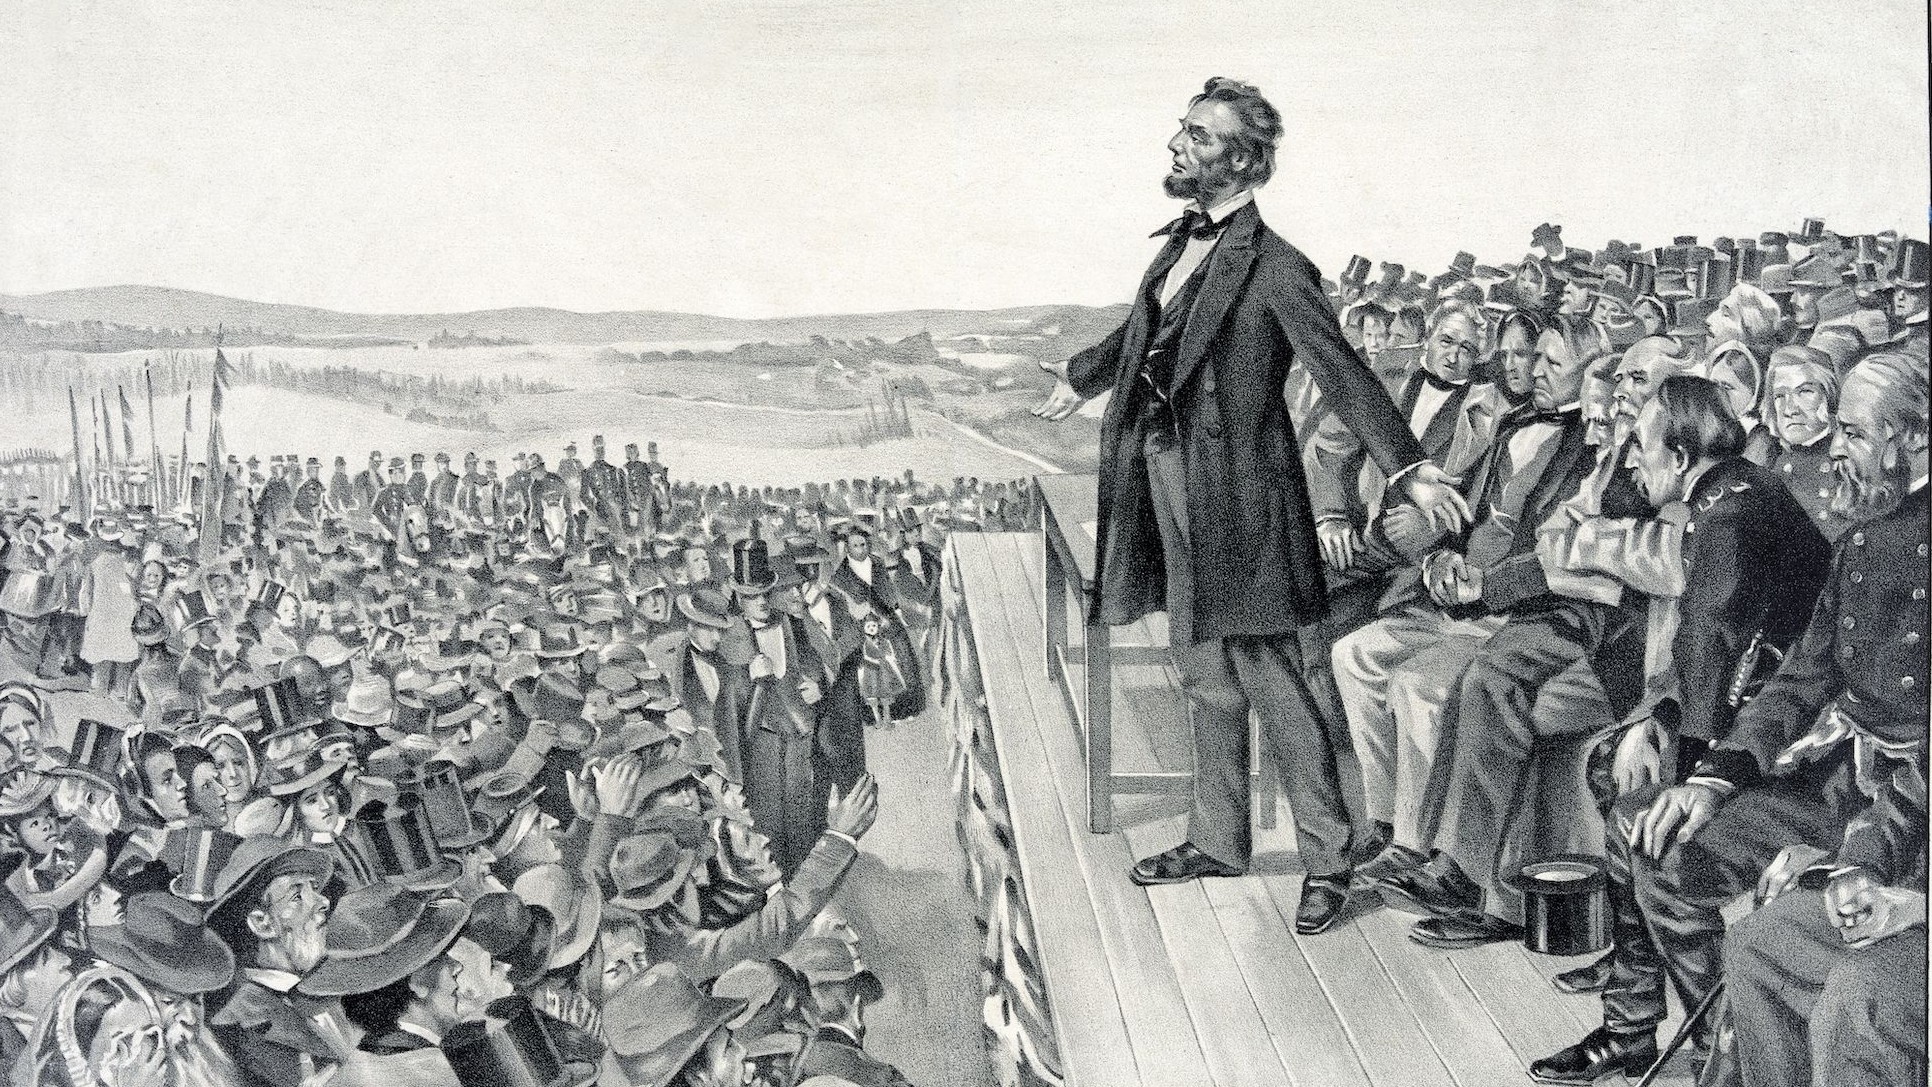 Abraham Lincoln: American prophet